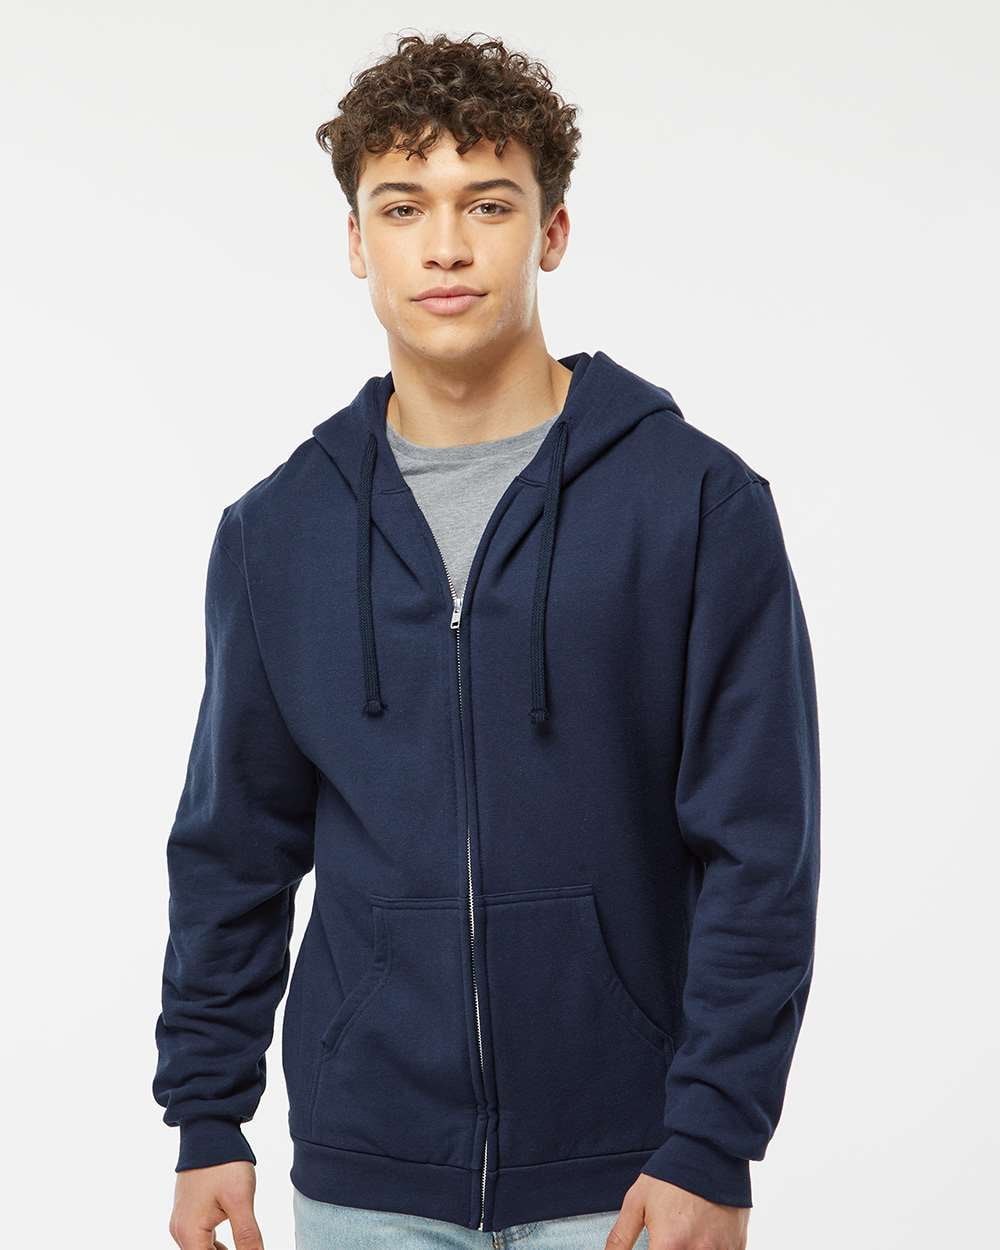 Tultex Unisex Full-Zip Hooded Sweatshirt - Walmart.com